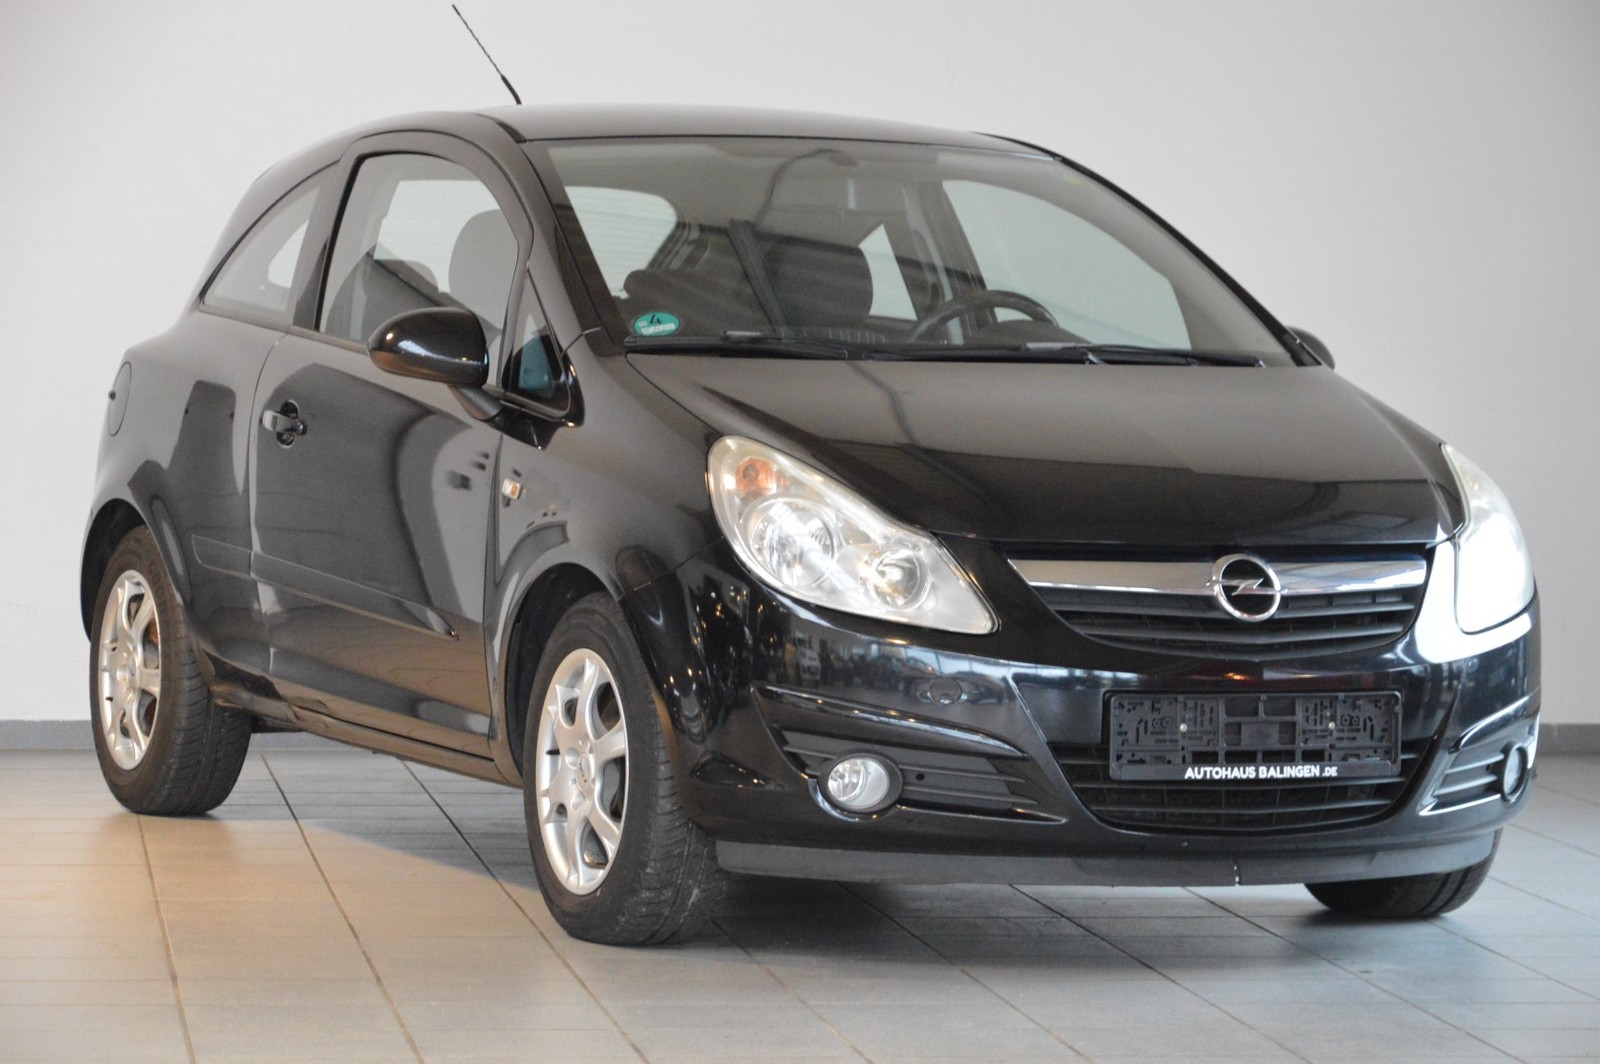 Opel Corsa D Catch Me Gebraucht Kaufen In Balingen Preis 2490 Eur Int Nr 1222 Verkauft